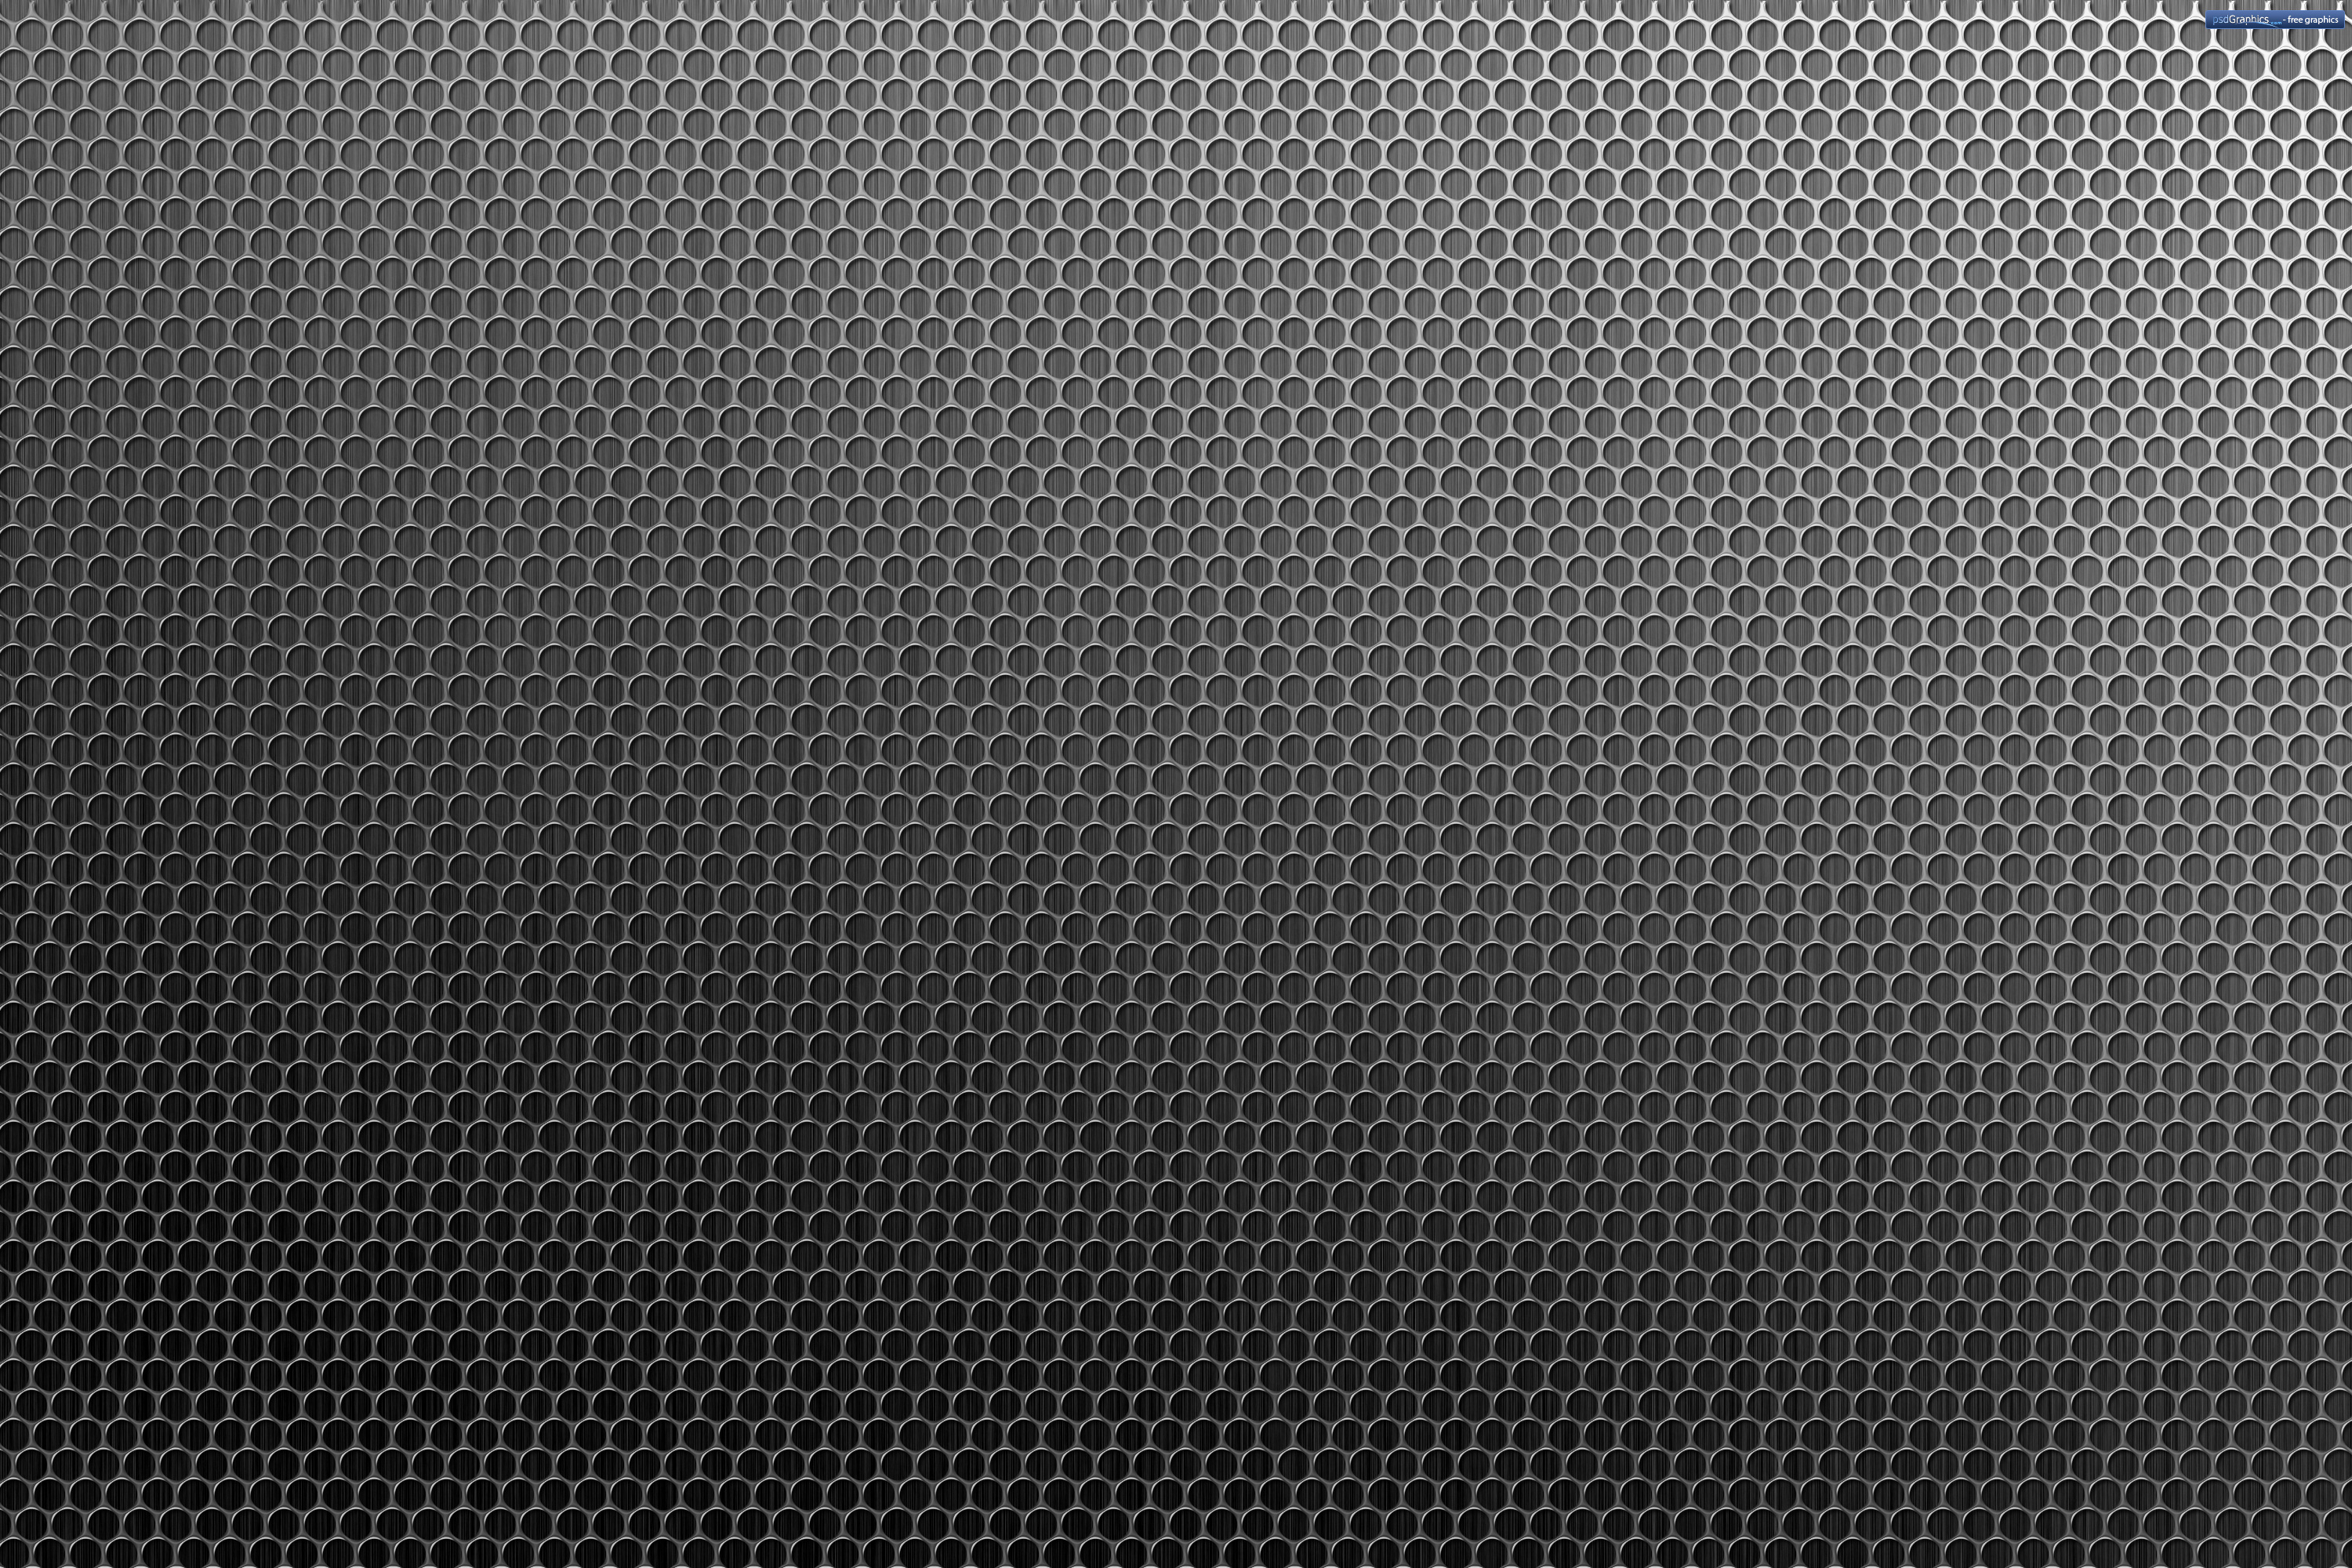 speaker-grille-texture.jpg